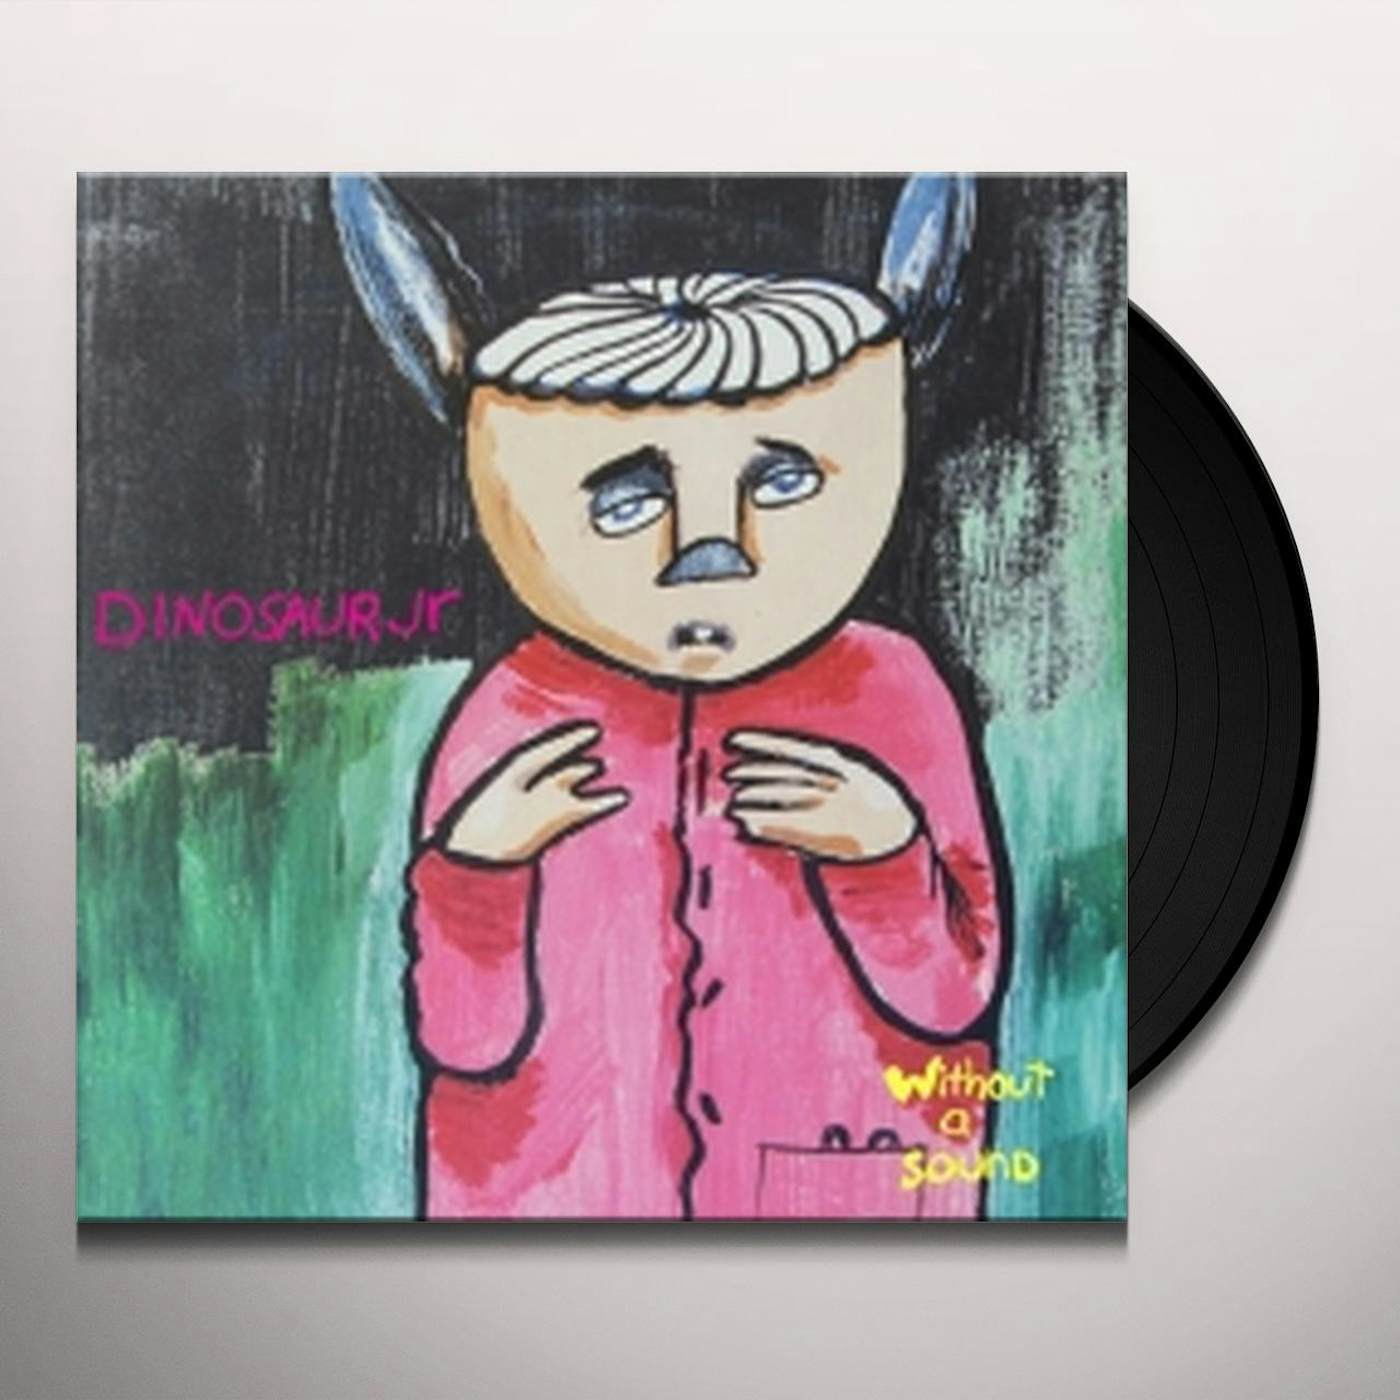 Dinosaur Jr. Without a Sound Vinyl Record